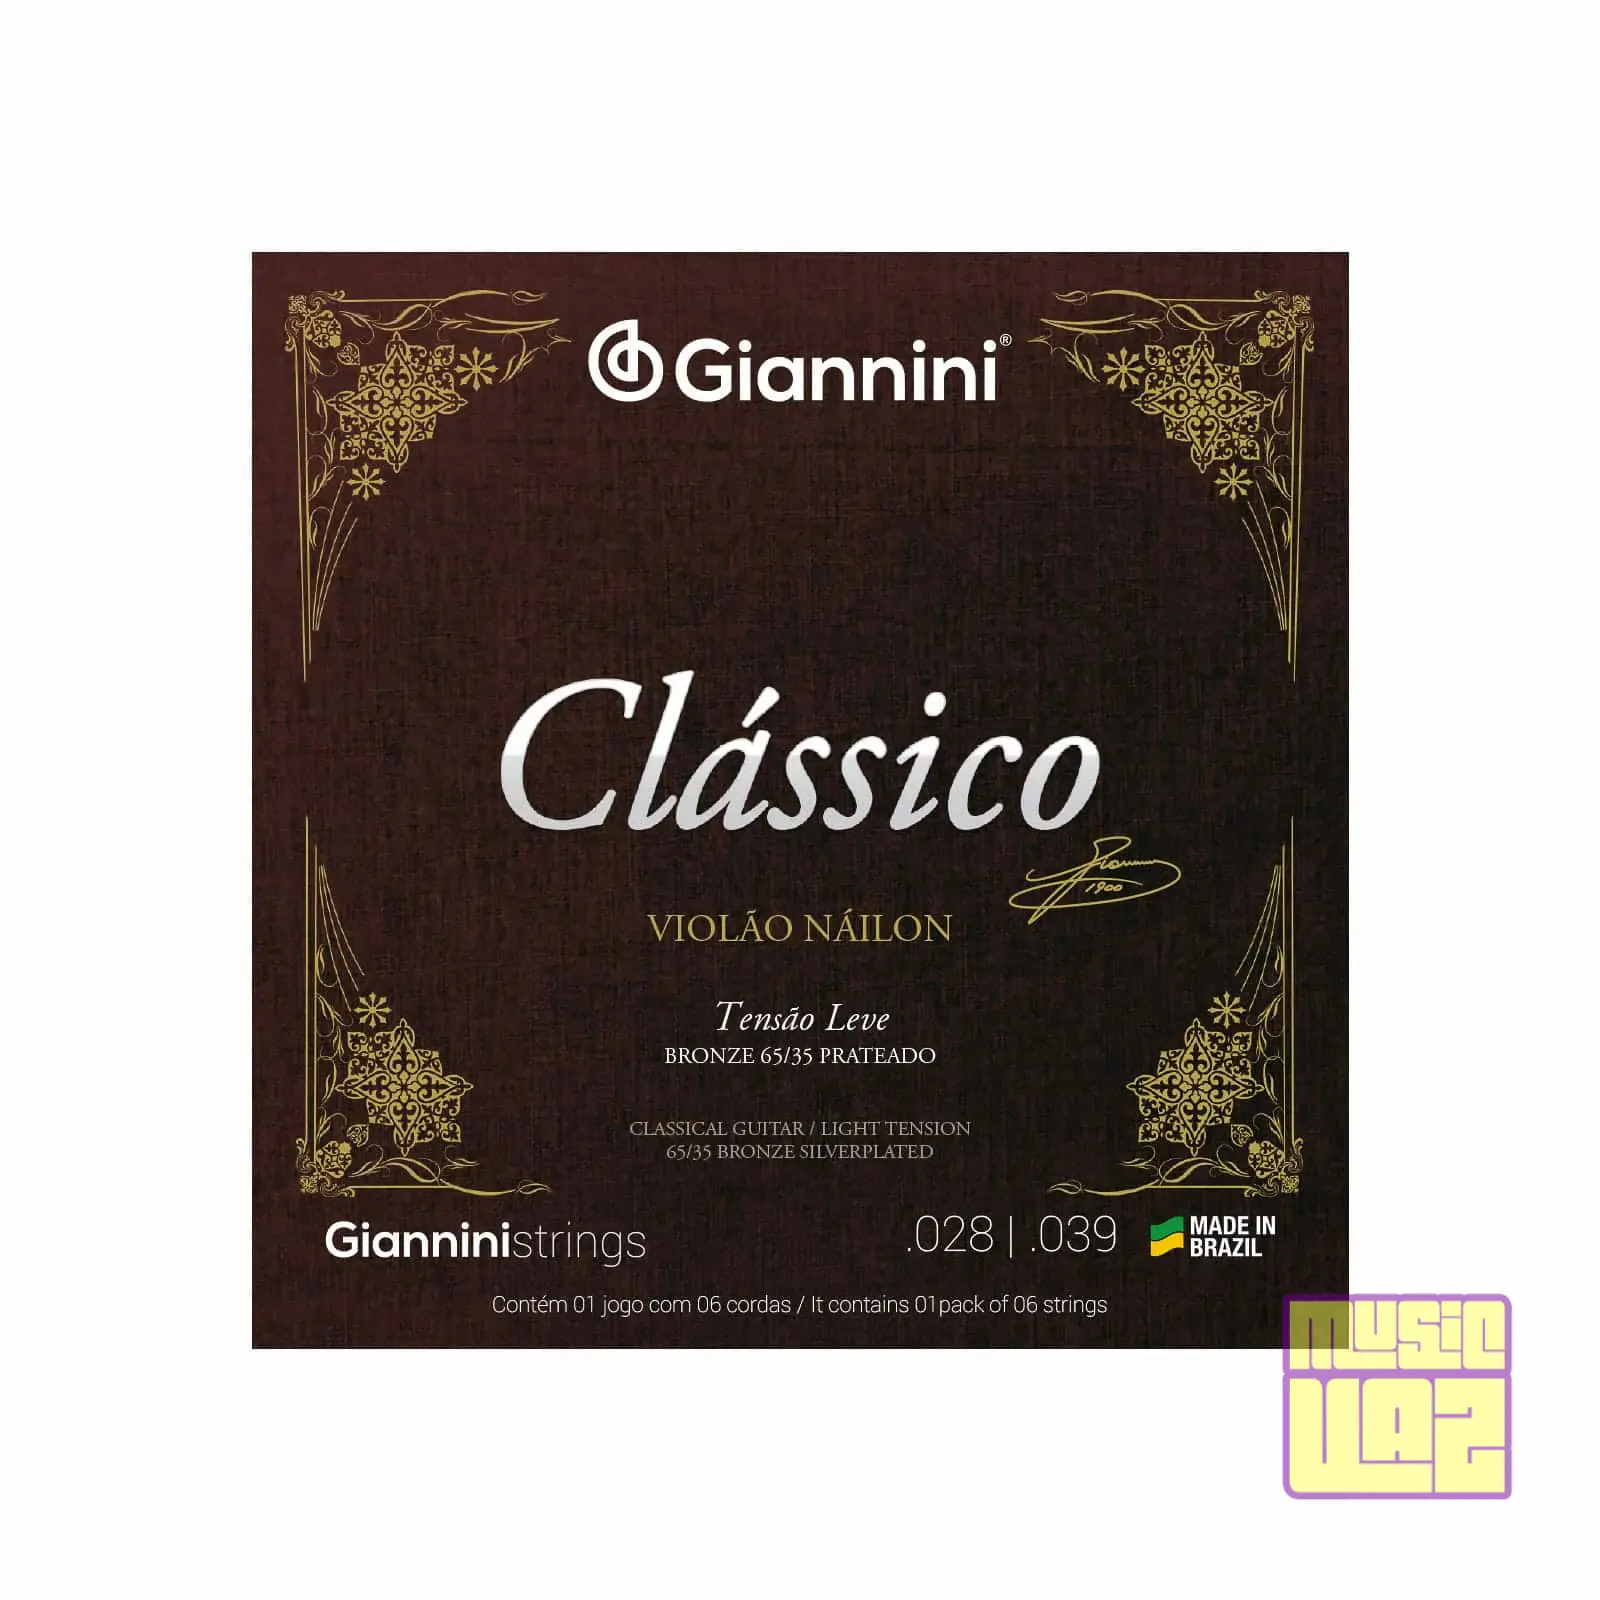 Giannini classico tensão leve genwpl-1ps-1